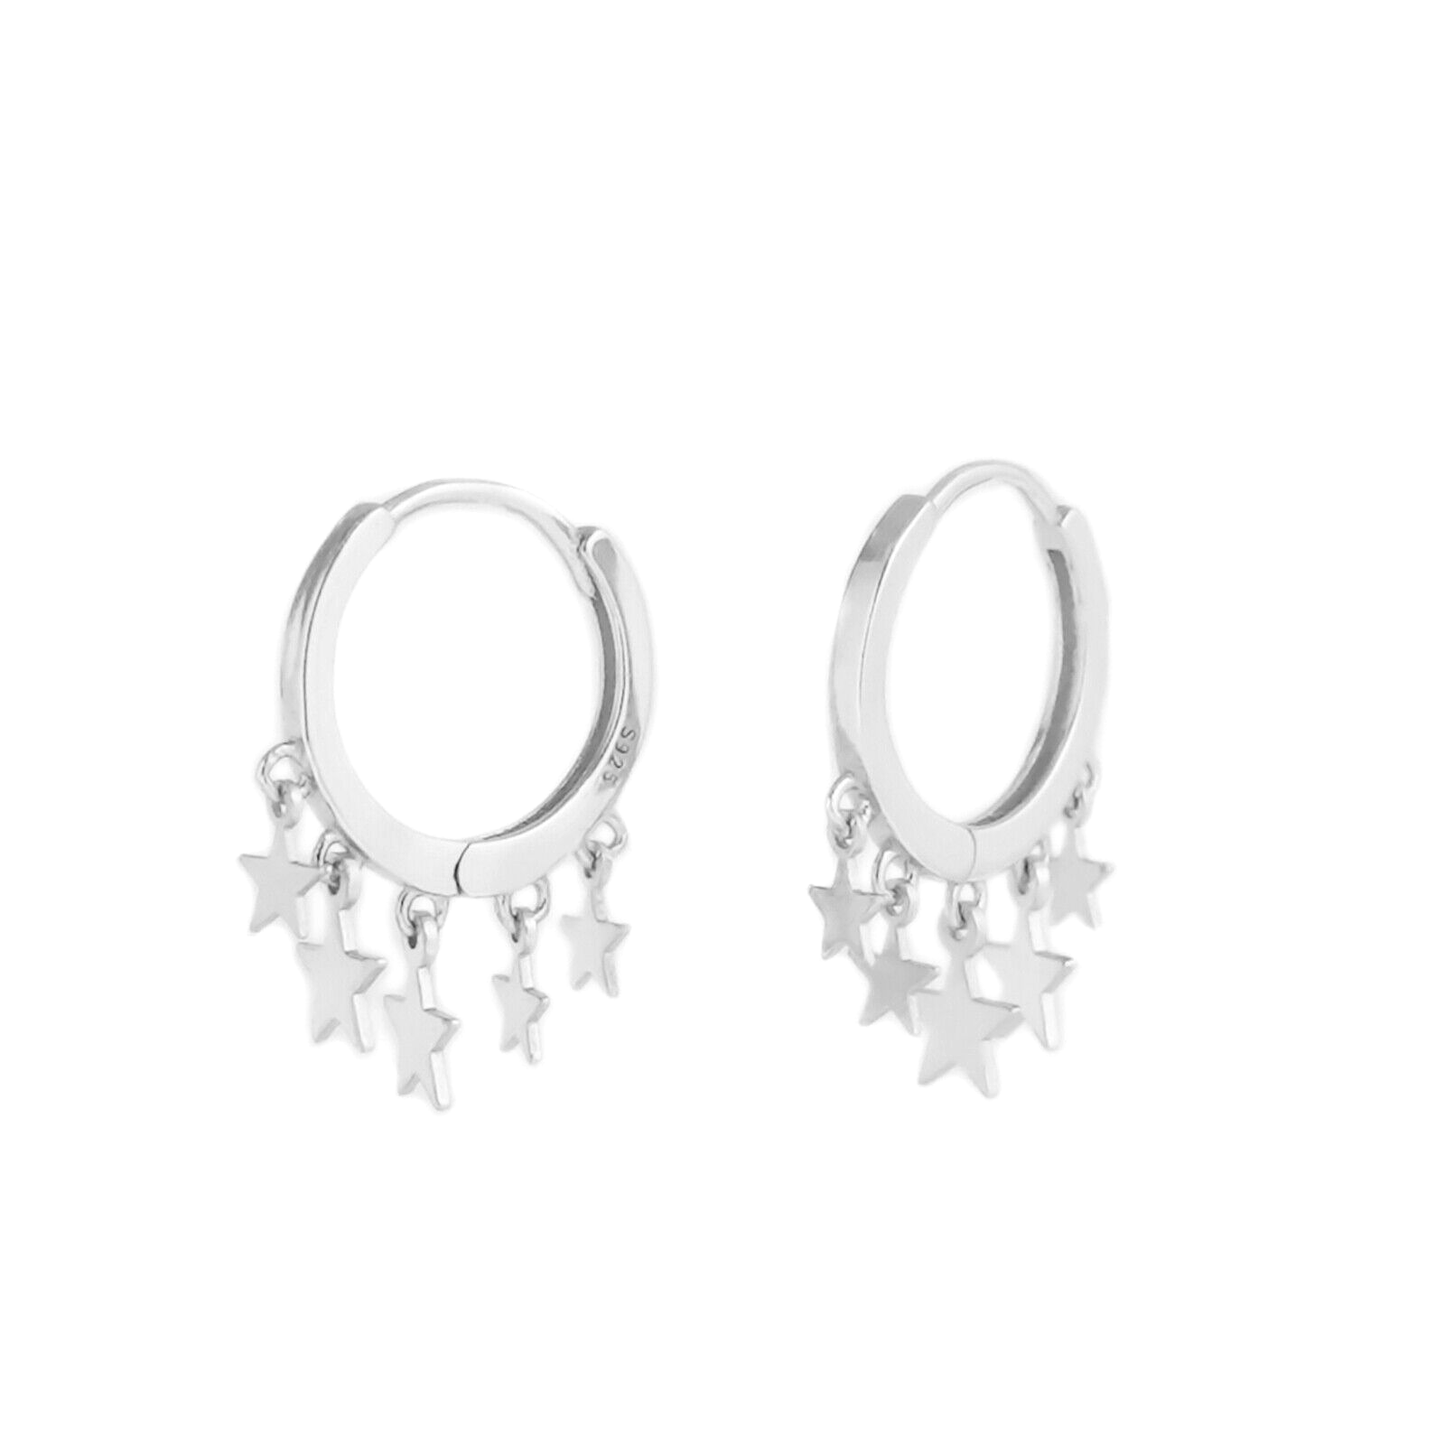 Sterling Silver Hinged Hoop Star Earrings with Charm Drops - sugarkittenlondon